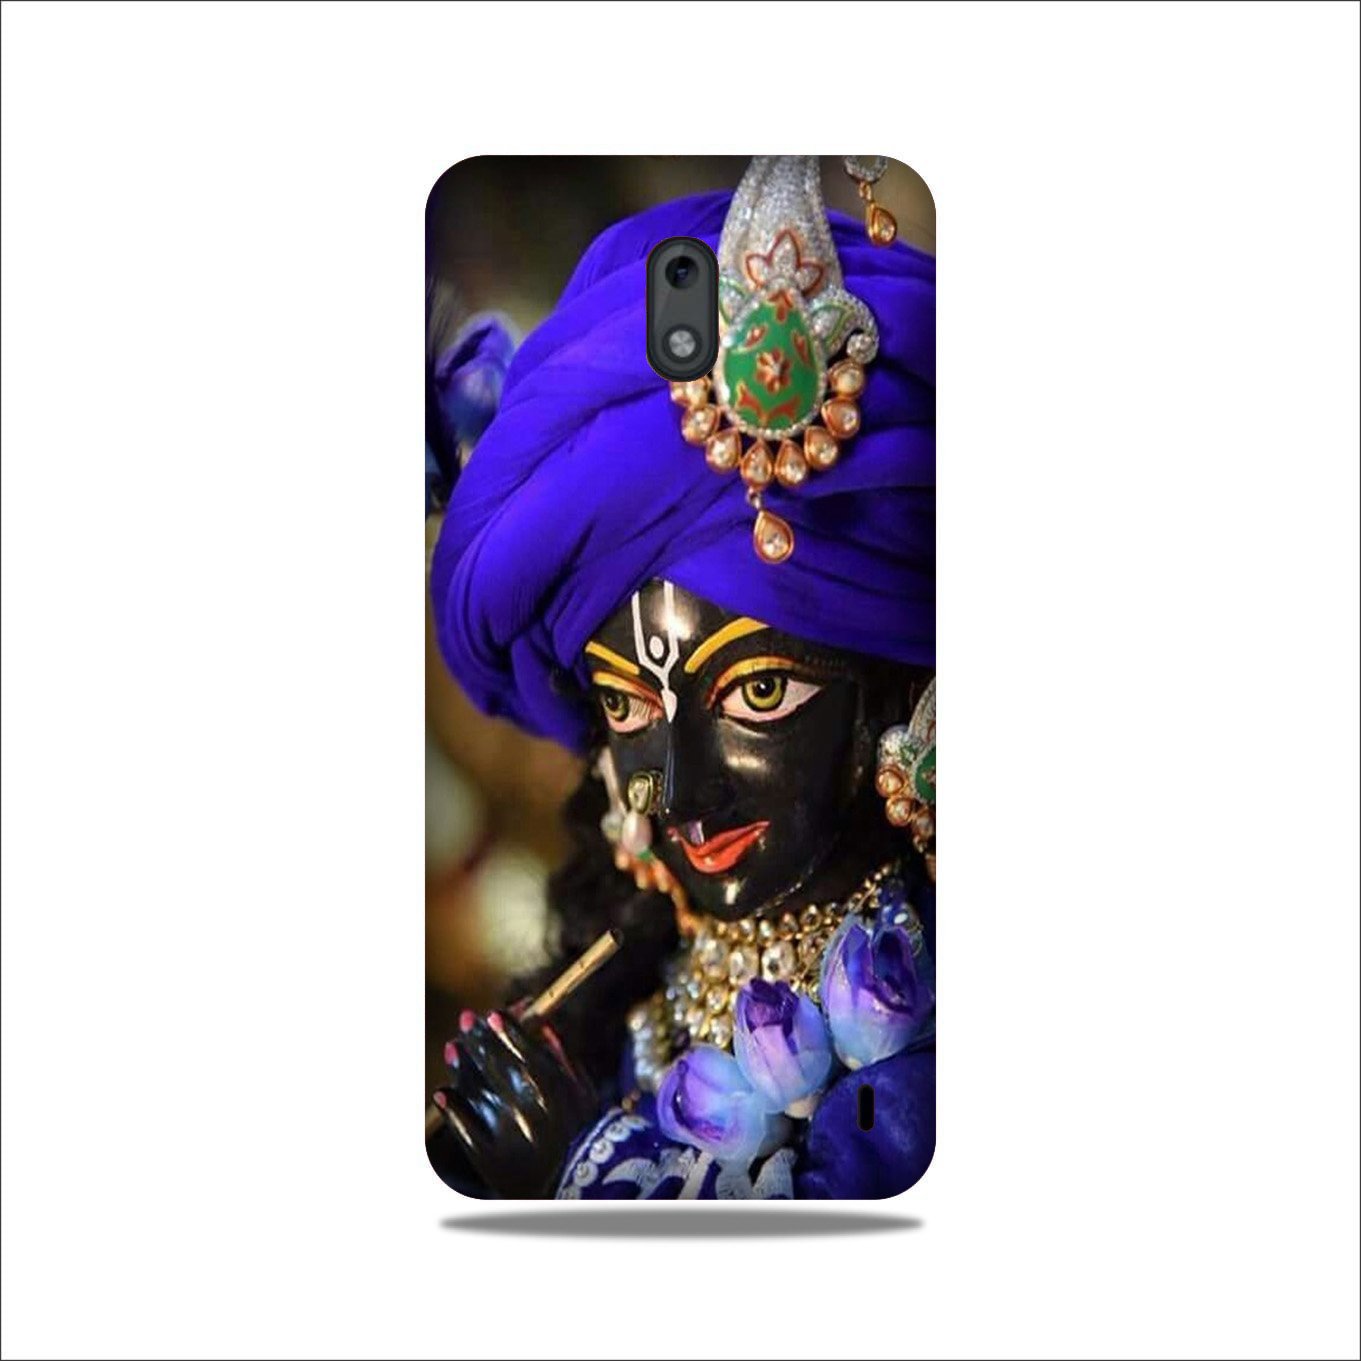 Lord Krishna4 Case for Nokia 3